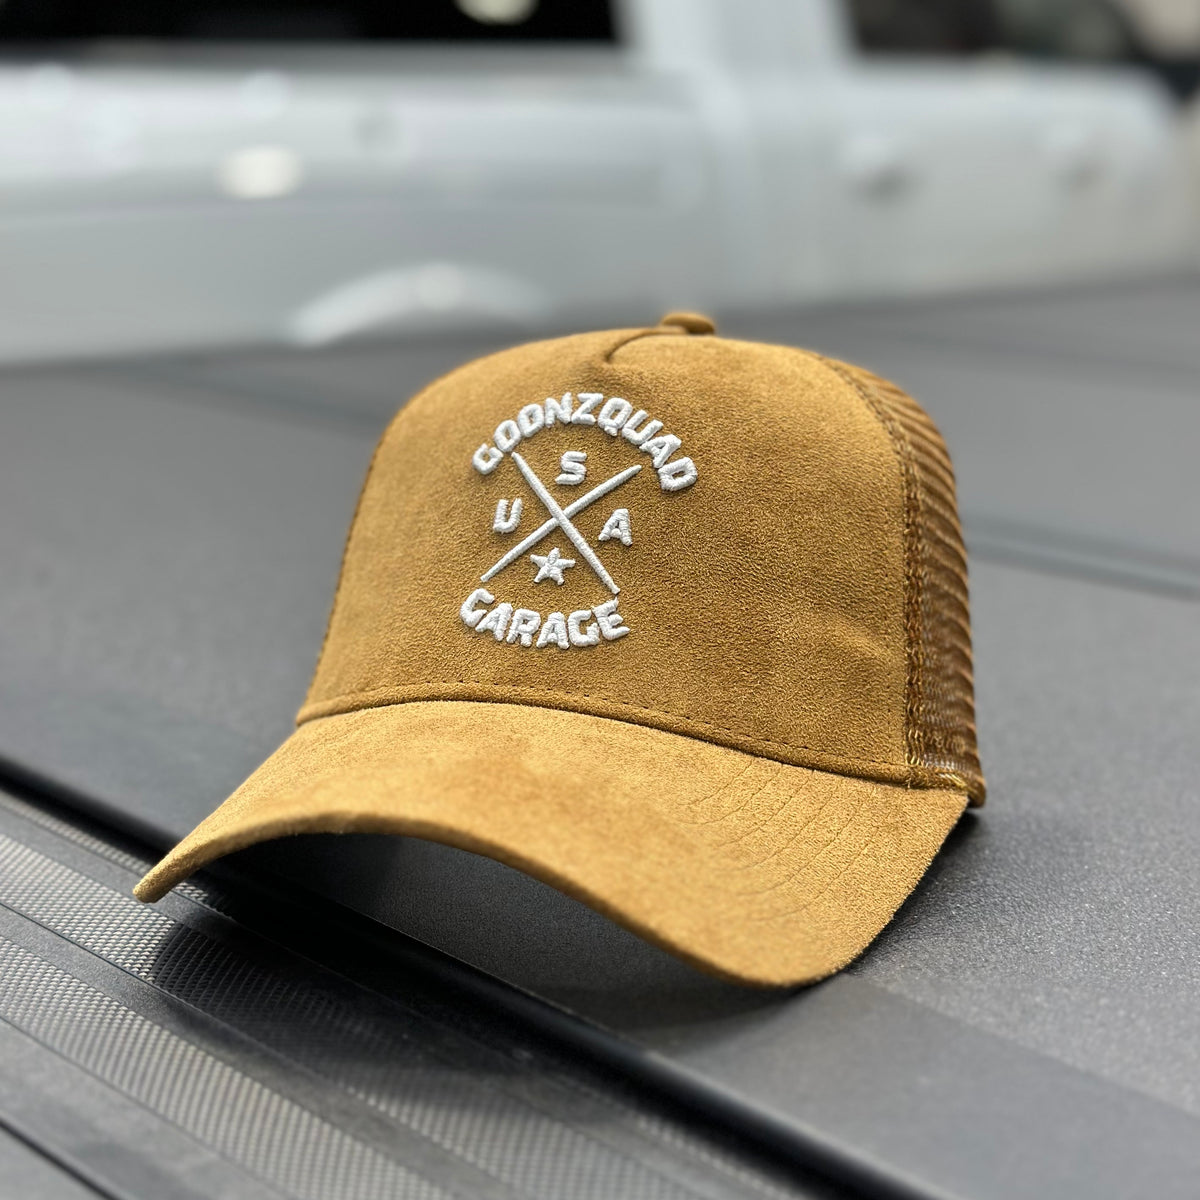 Brown Suede Goonzquad Hat